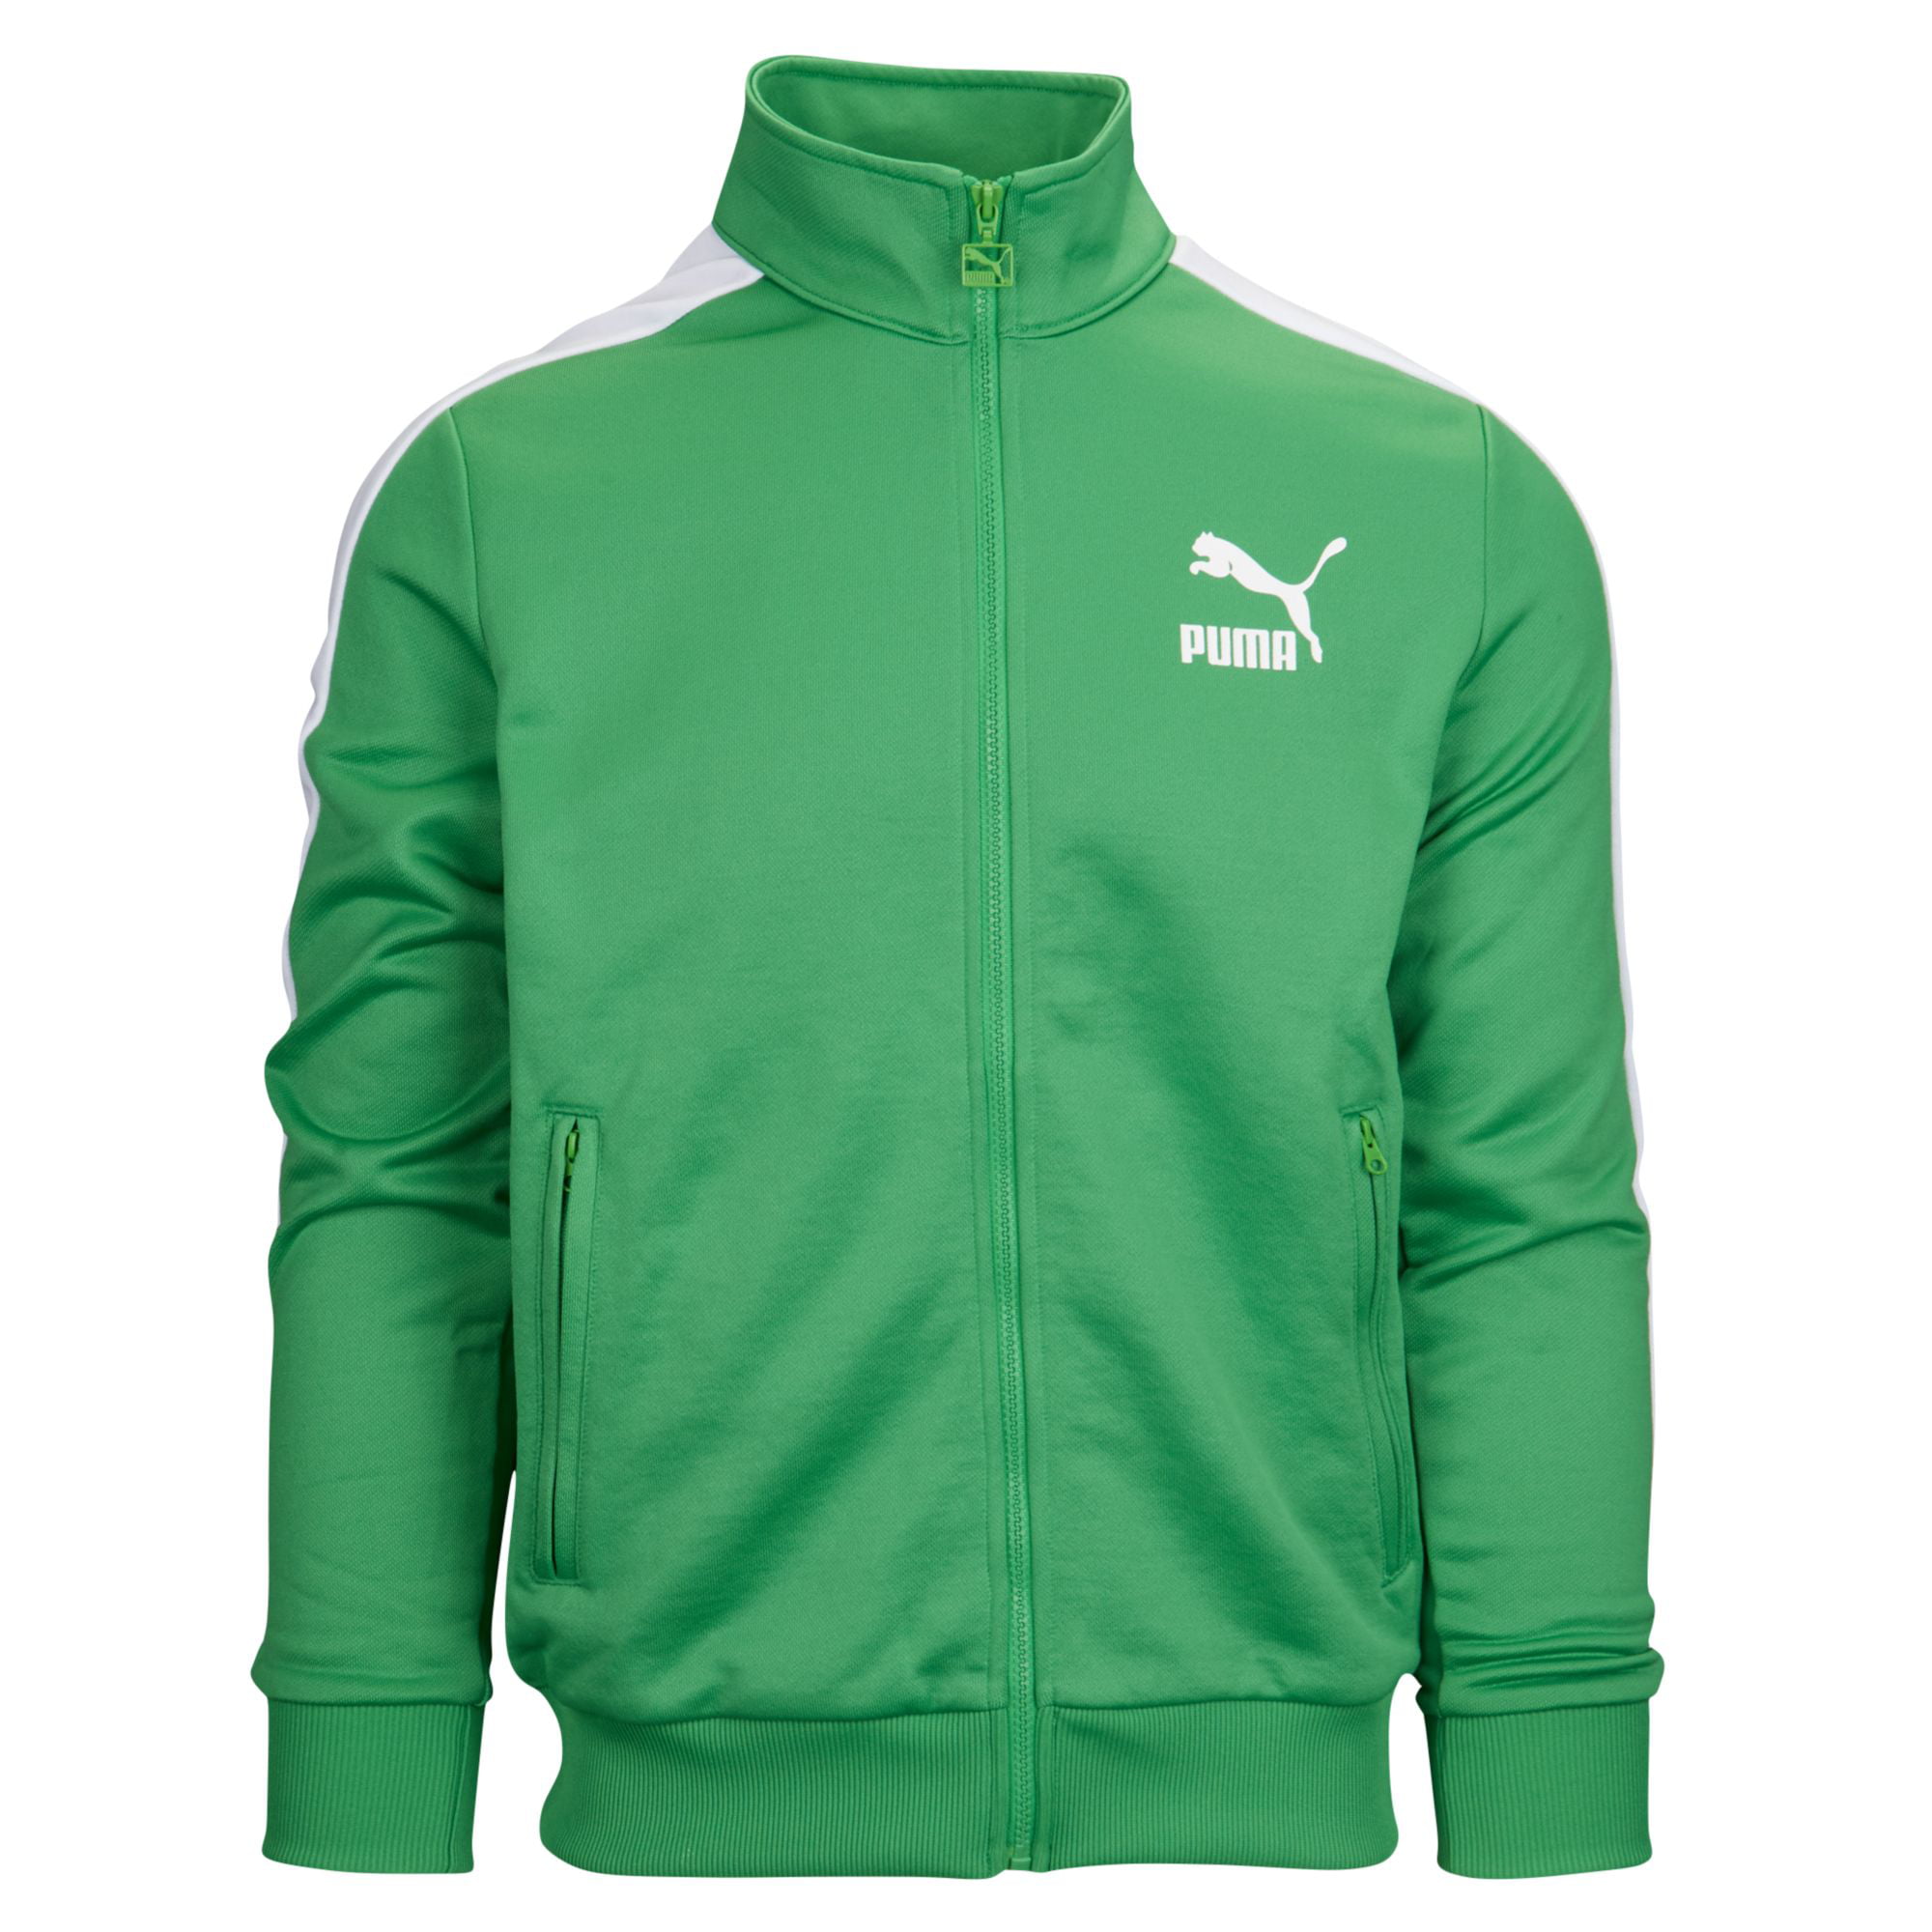 puma green track jacket